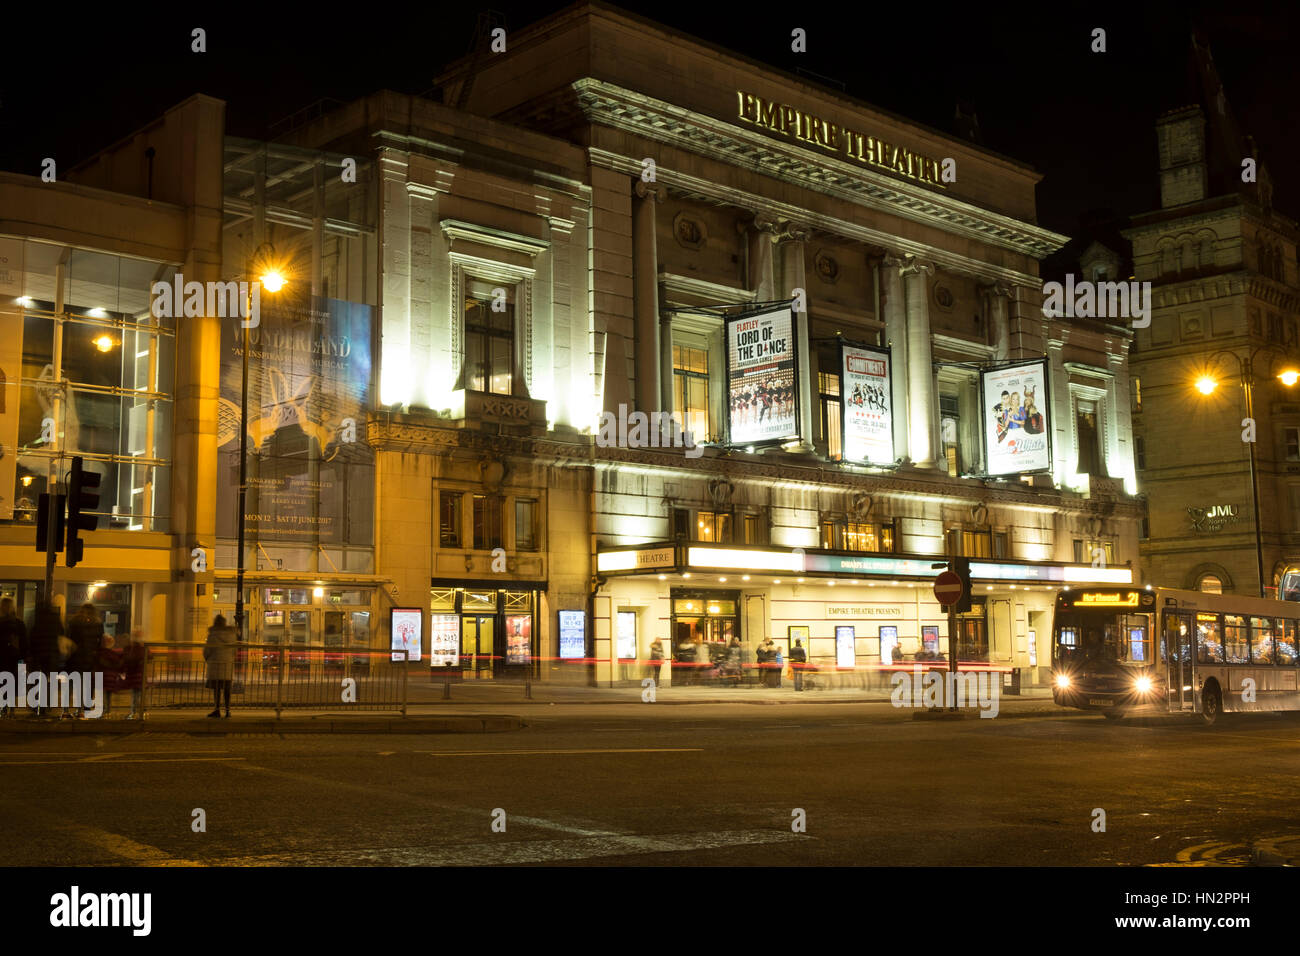 Liverpool empire theater Stock Photo